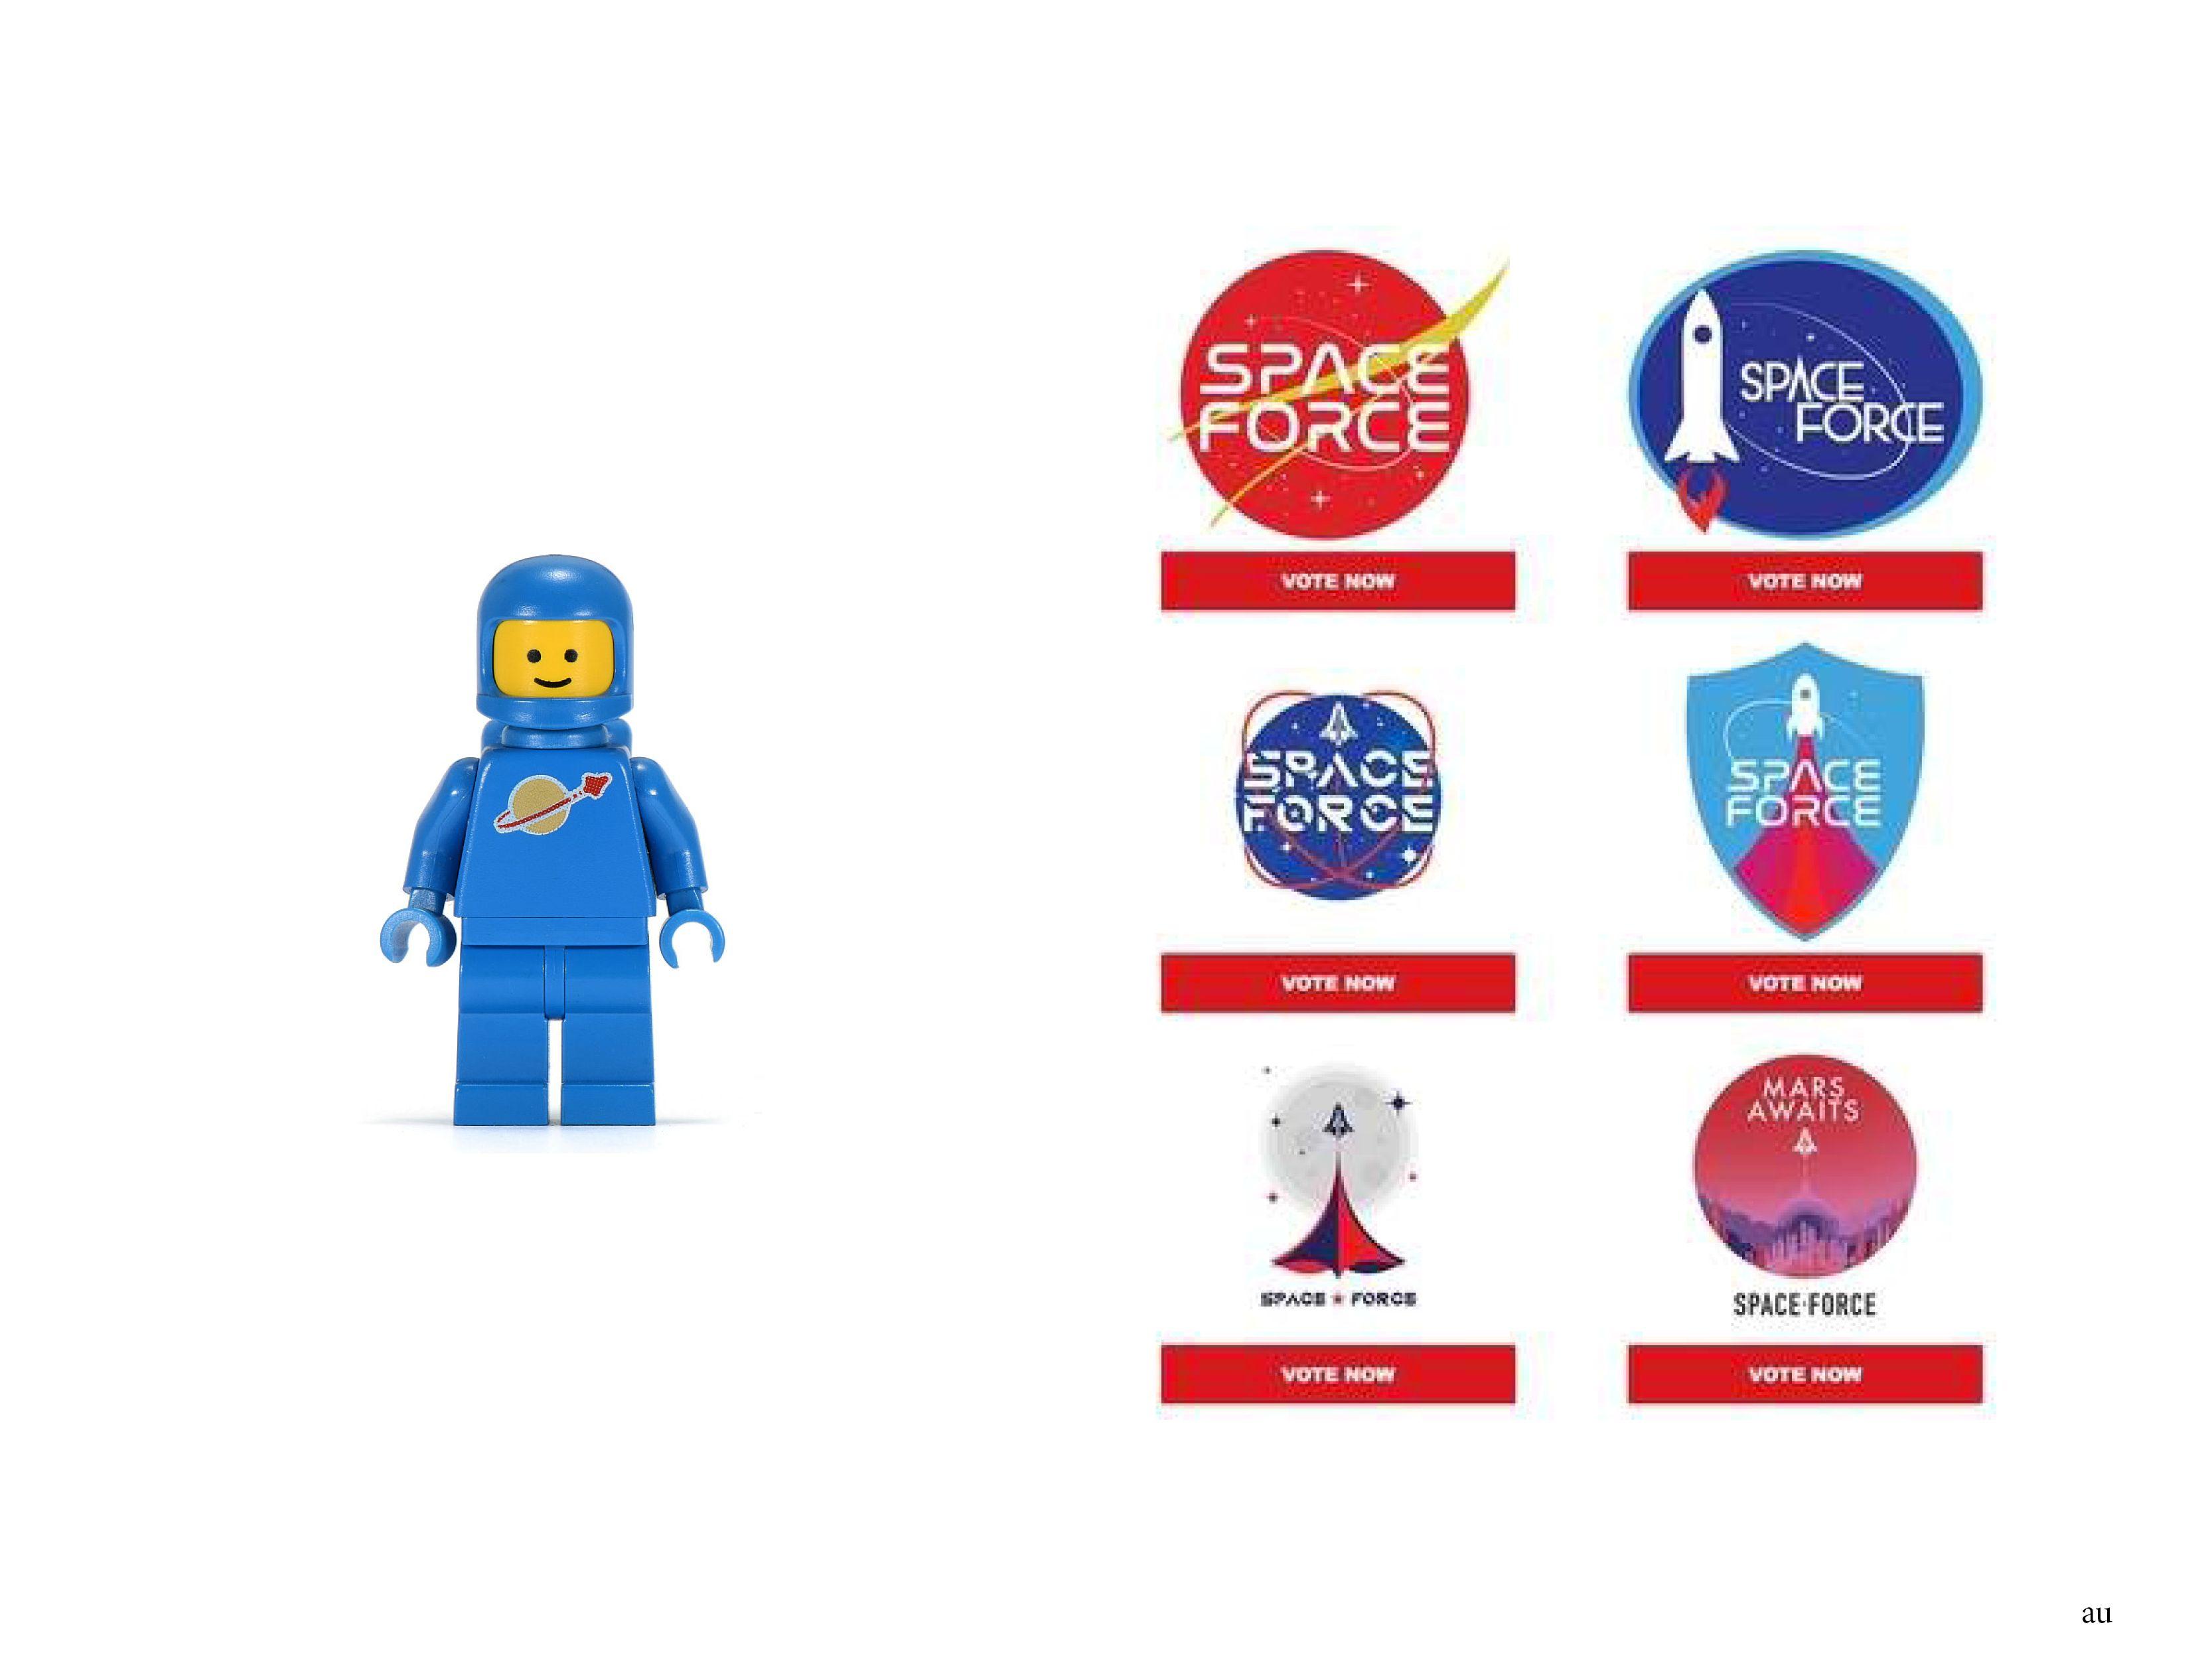 LEGO Space Logo - Lego Space Logo vs Space Force Logos